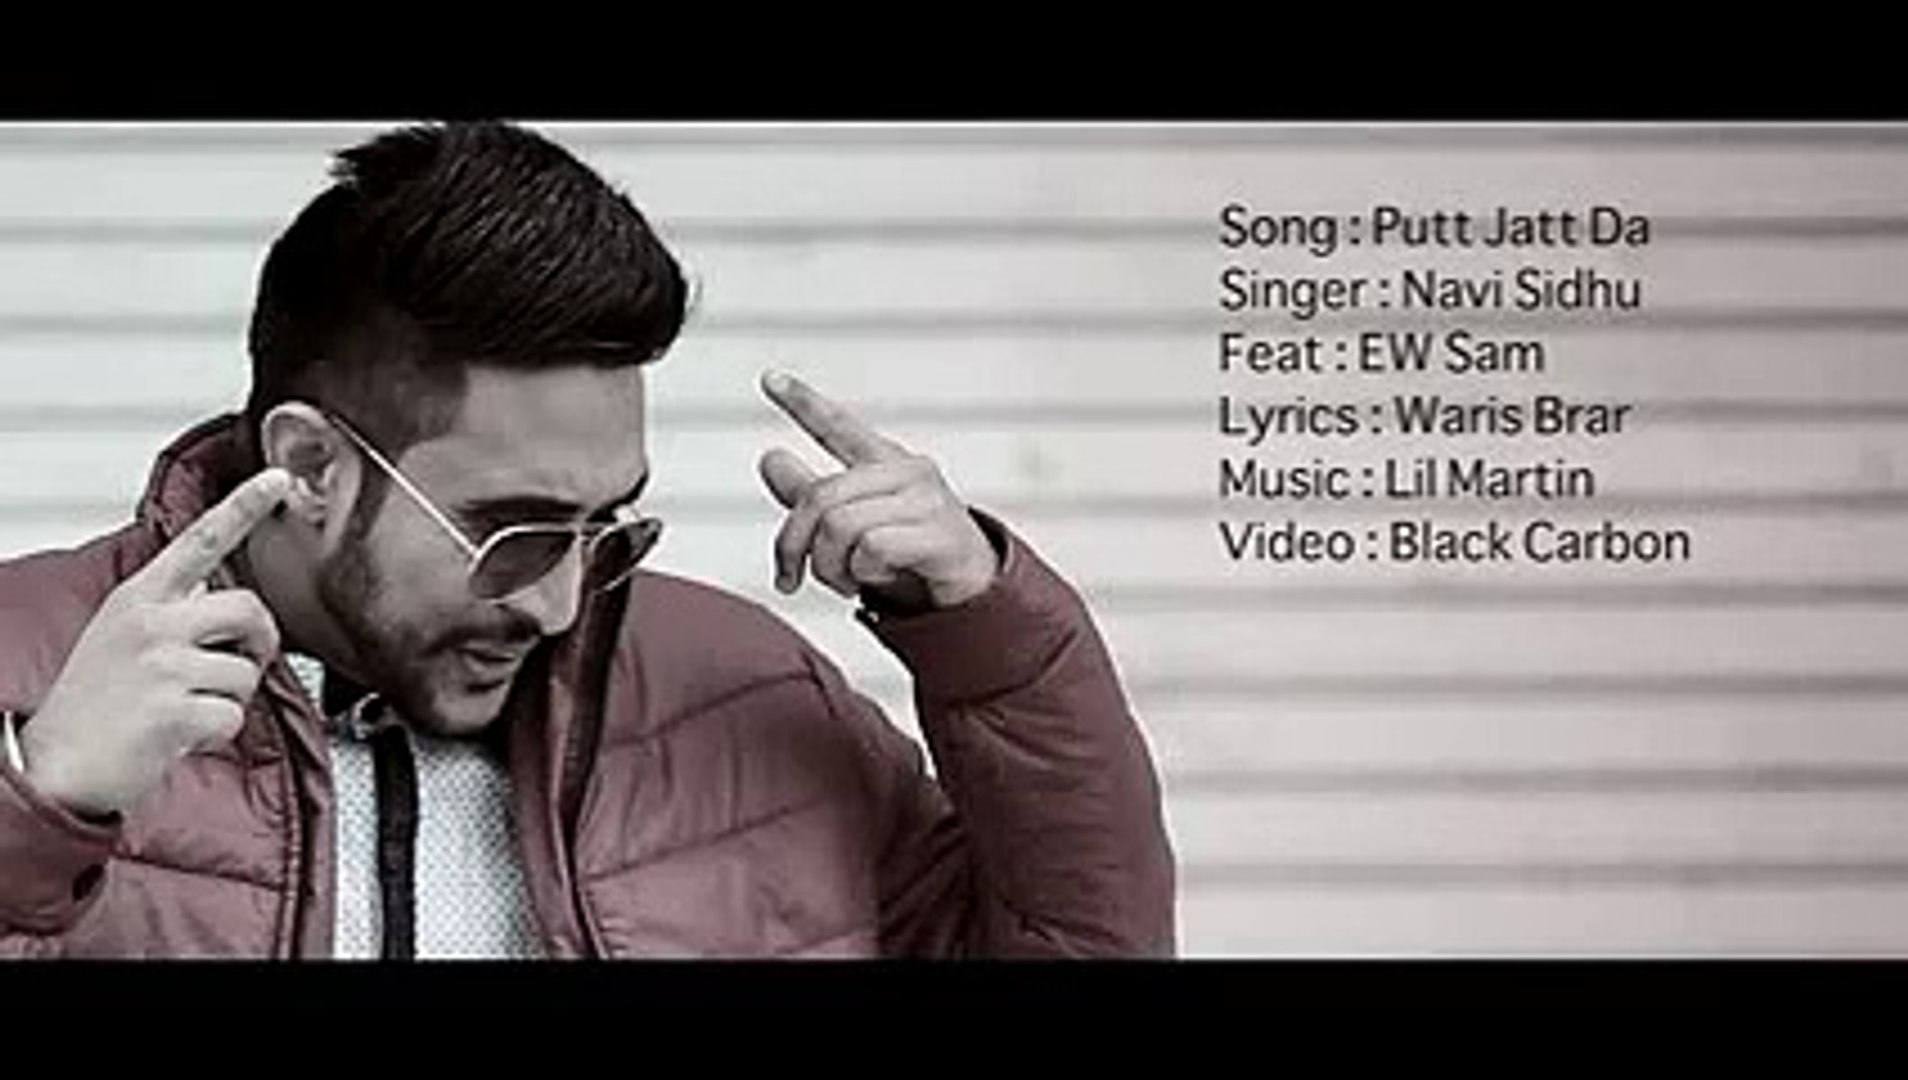 New Punjabi Songs 2016 PUTT JATT DA NAVI SIDHU Latest New Punjabi Songs 2016 top songs best songs ne